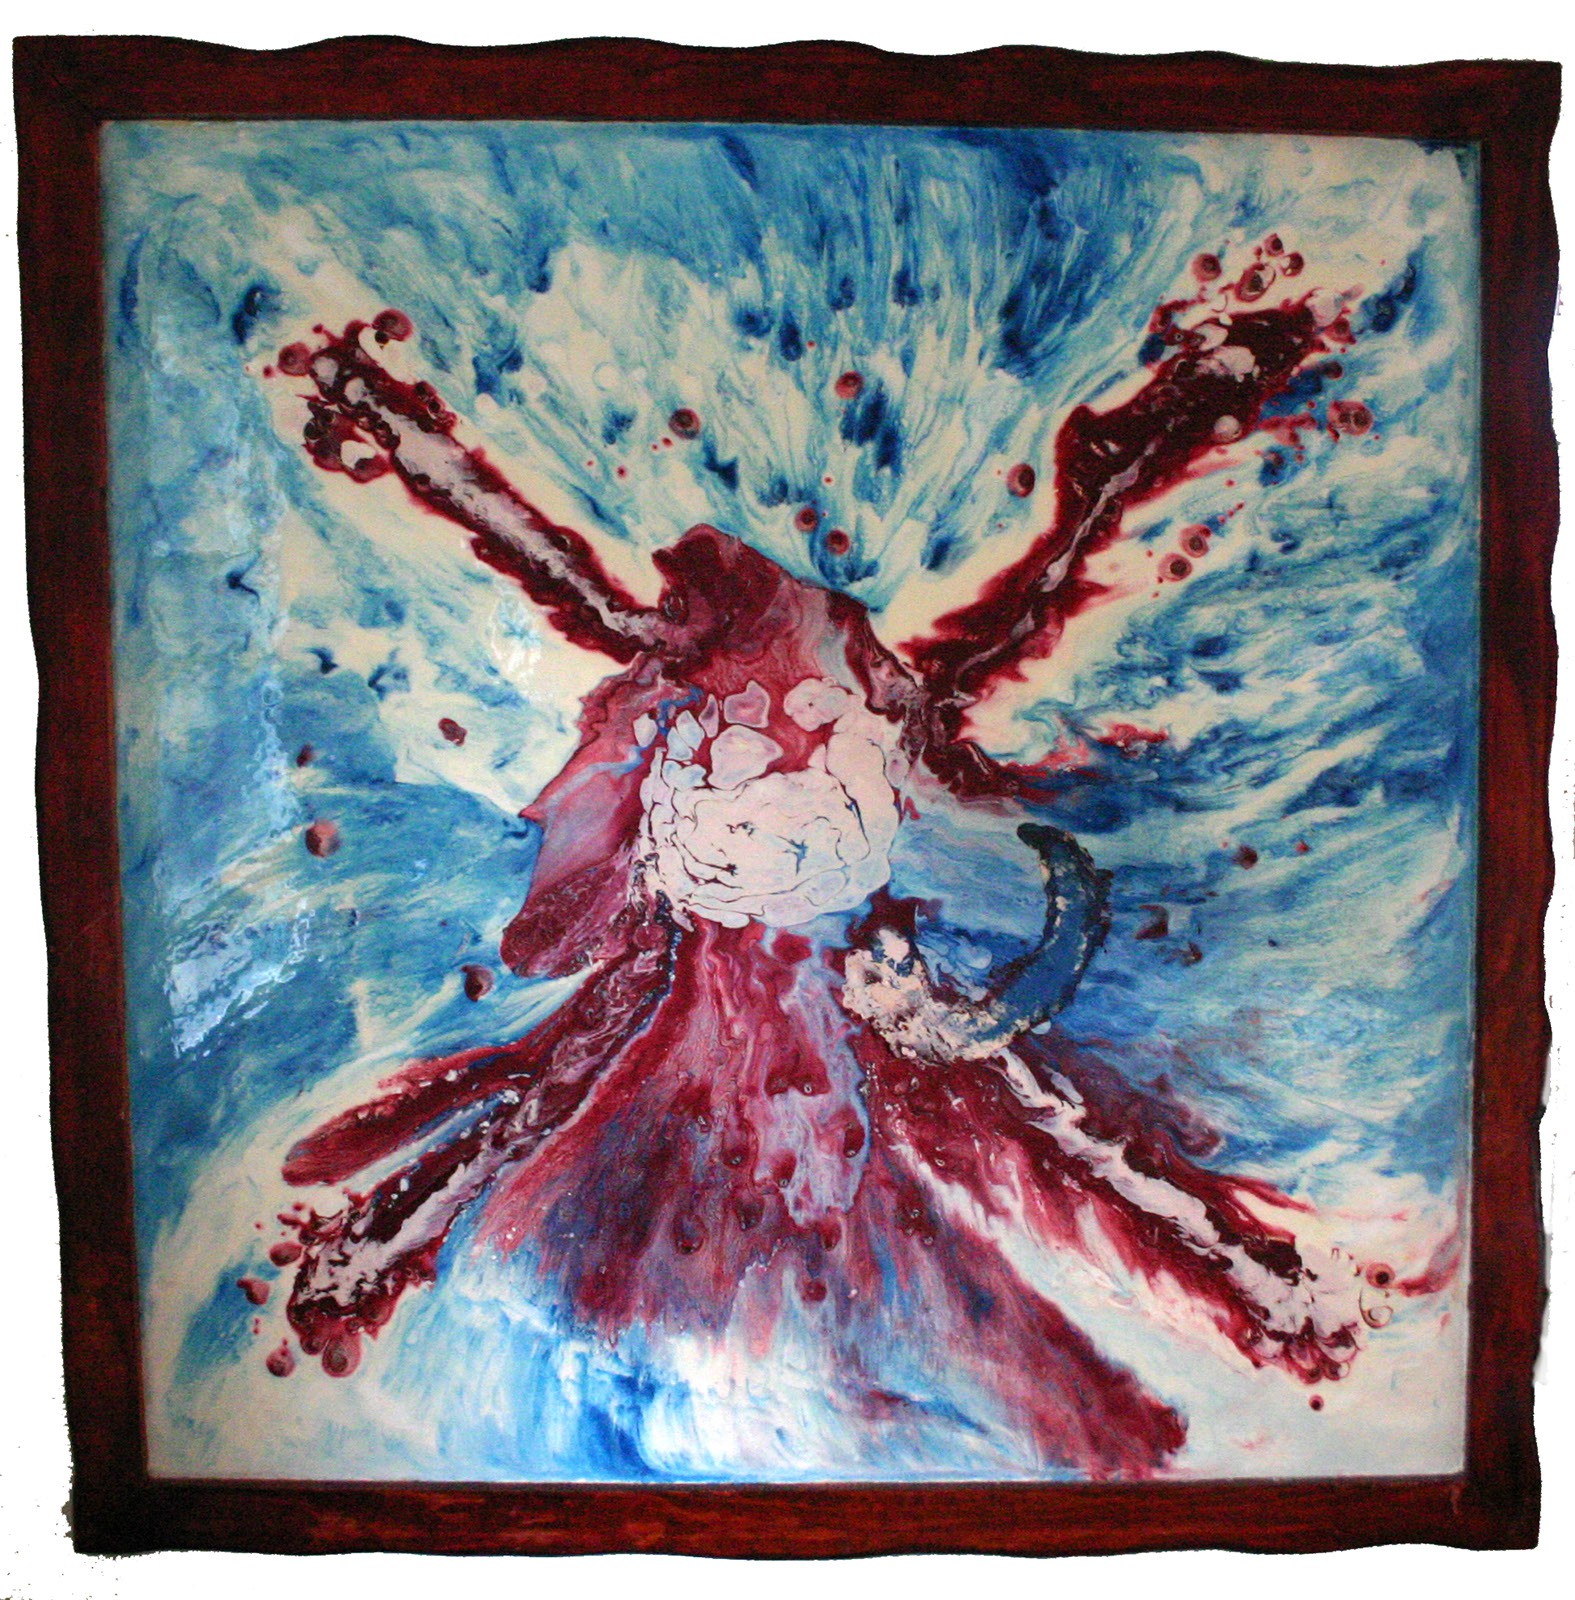 Explosion of the Mind, 2004 60” x 60” Liquid Plastic, Oil Paint, Porcelain on Canvas. SOLD